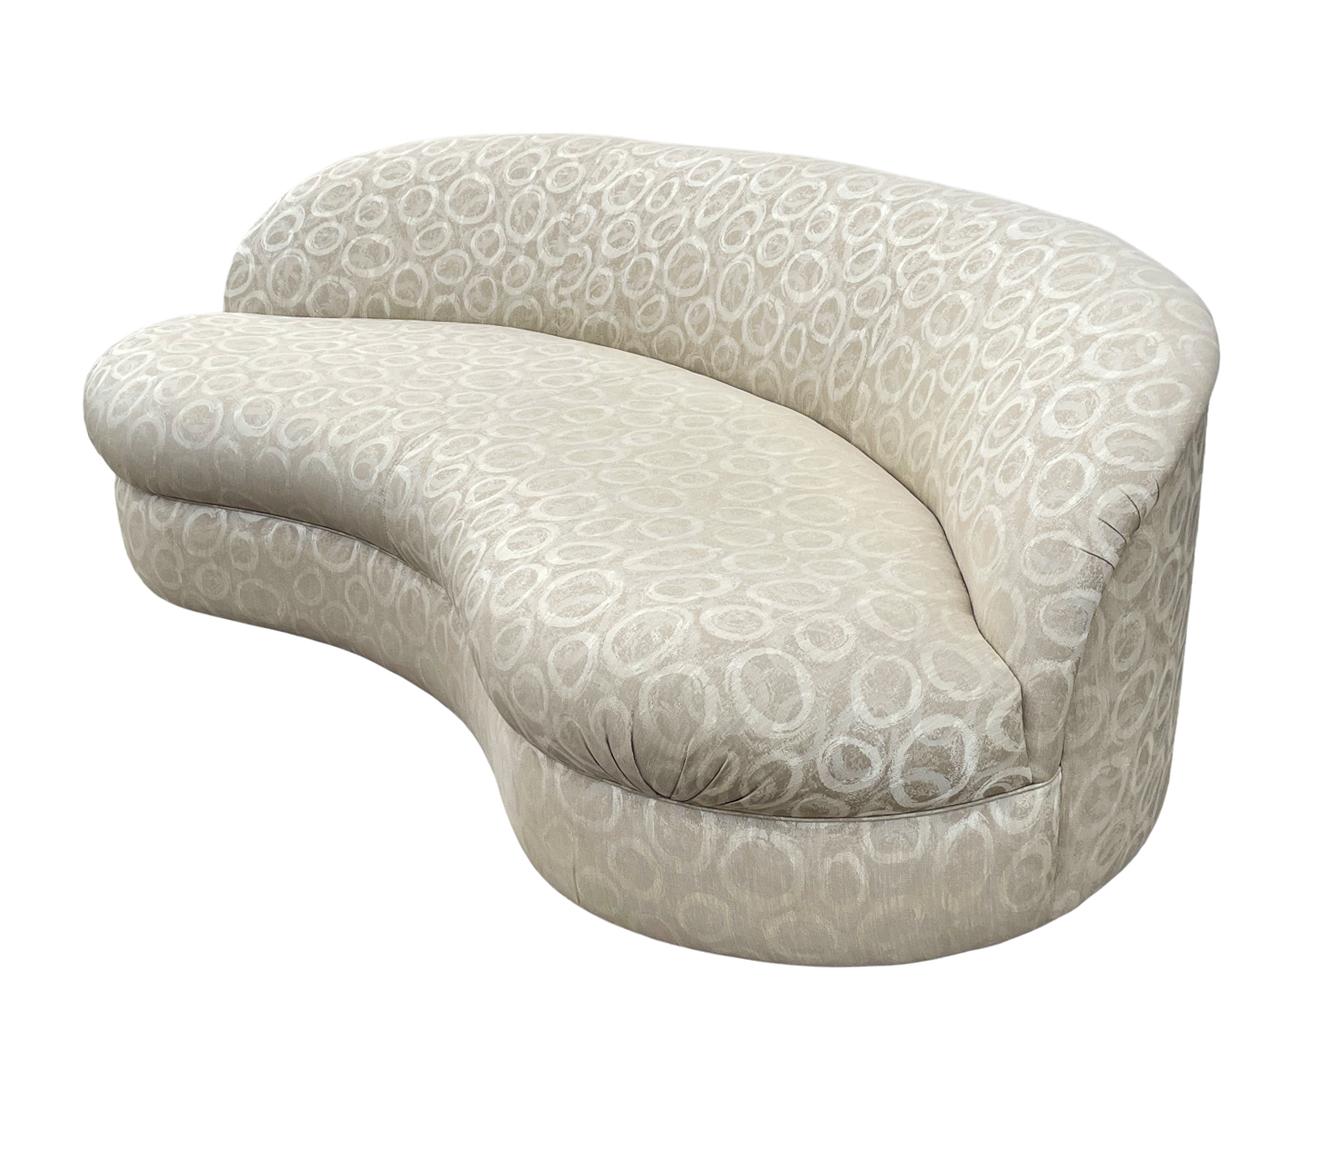 Late 20th Century Mid Century Italian Modern Kidney Shape Curved Sofa For Sale